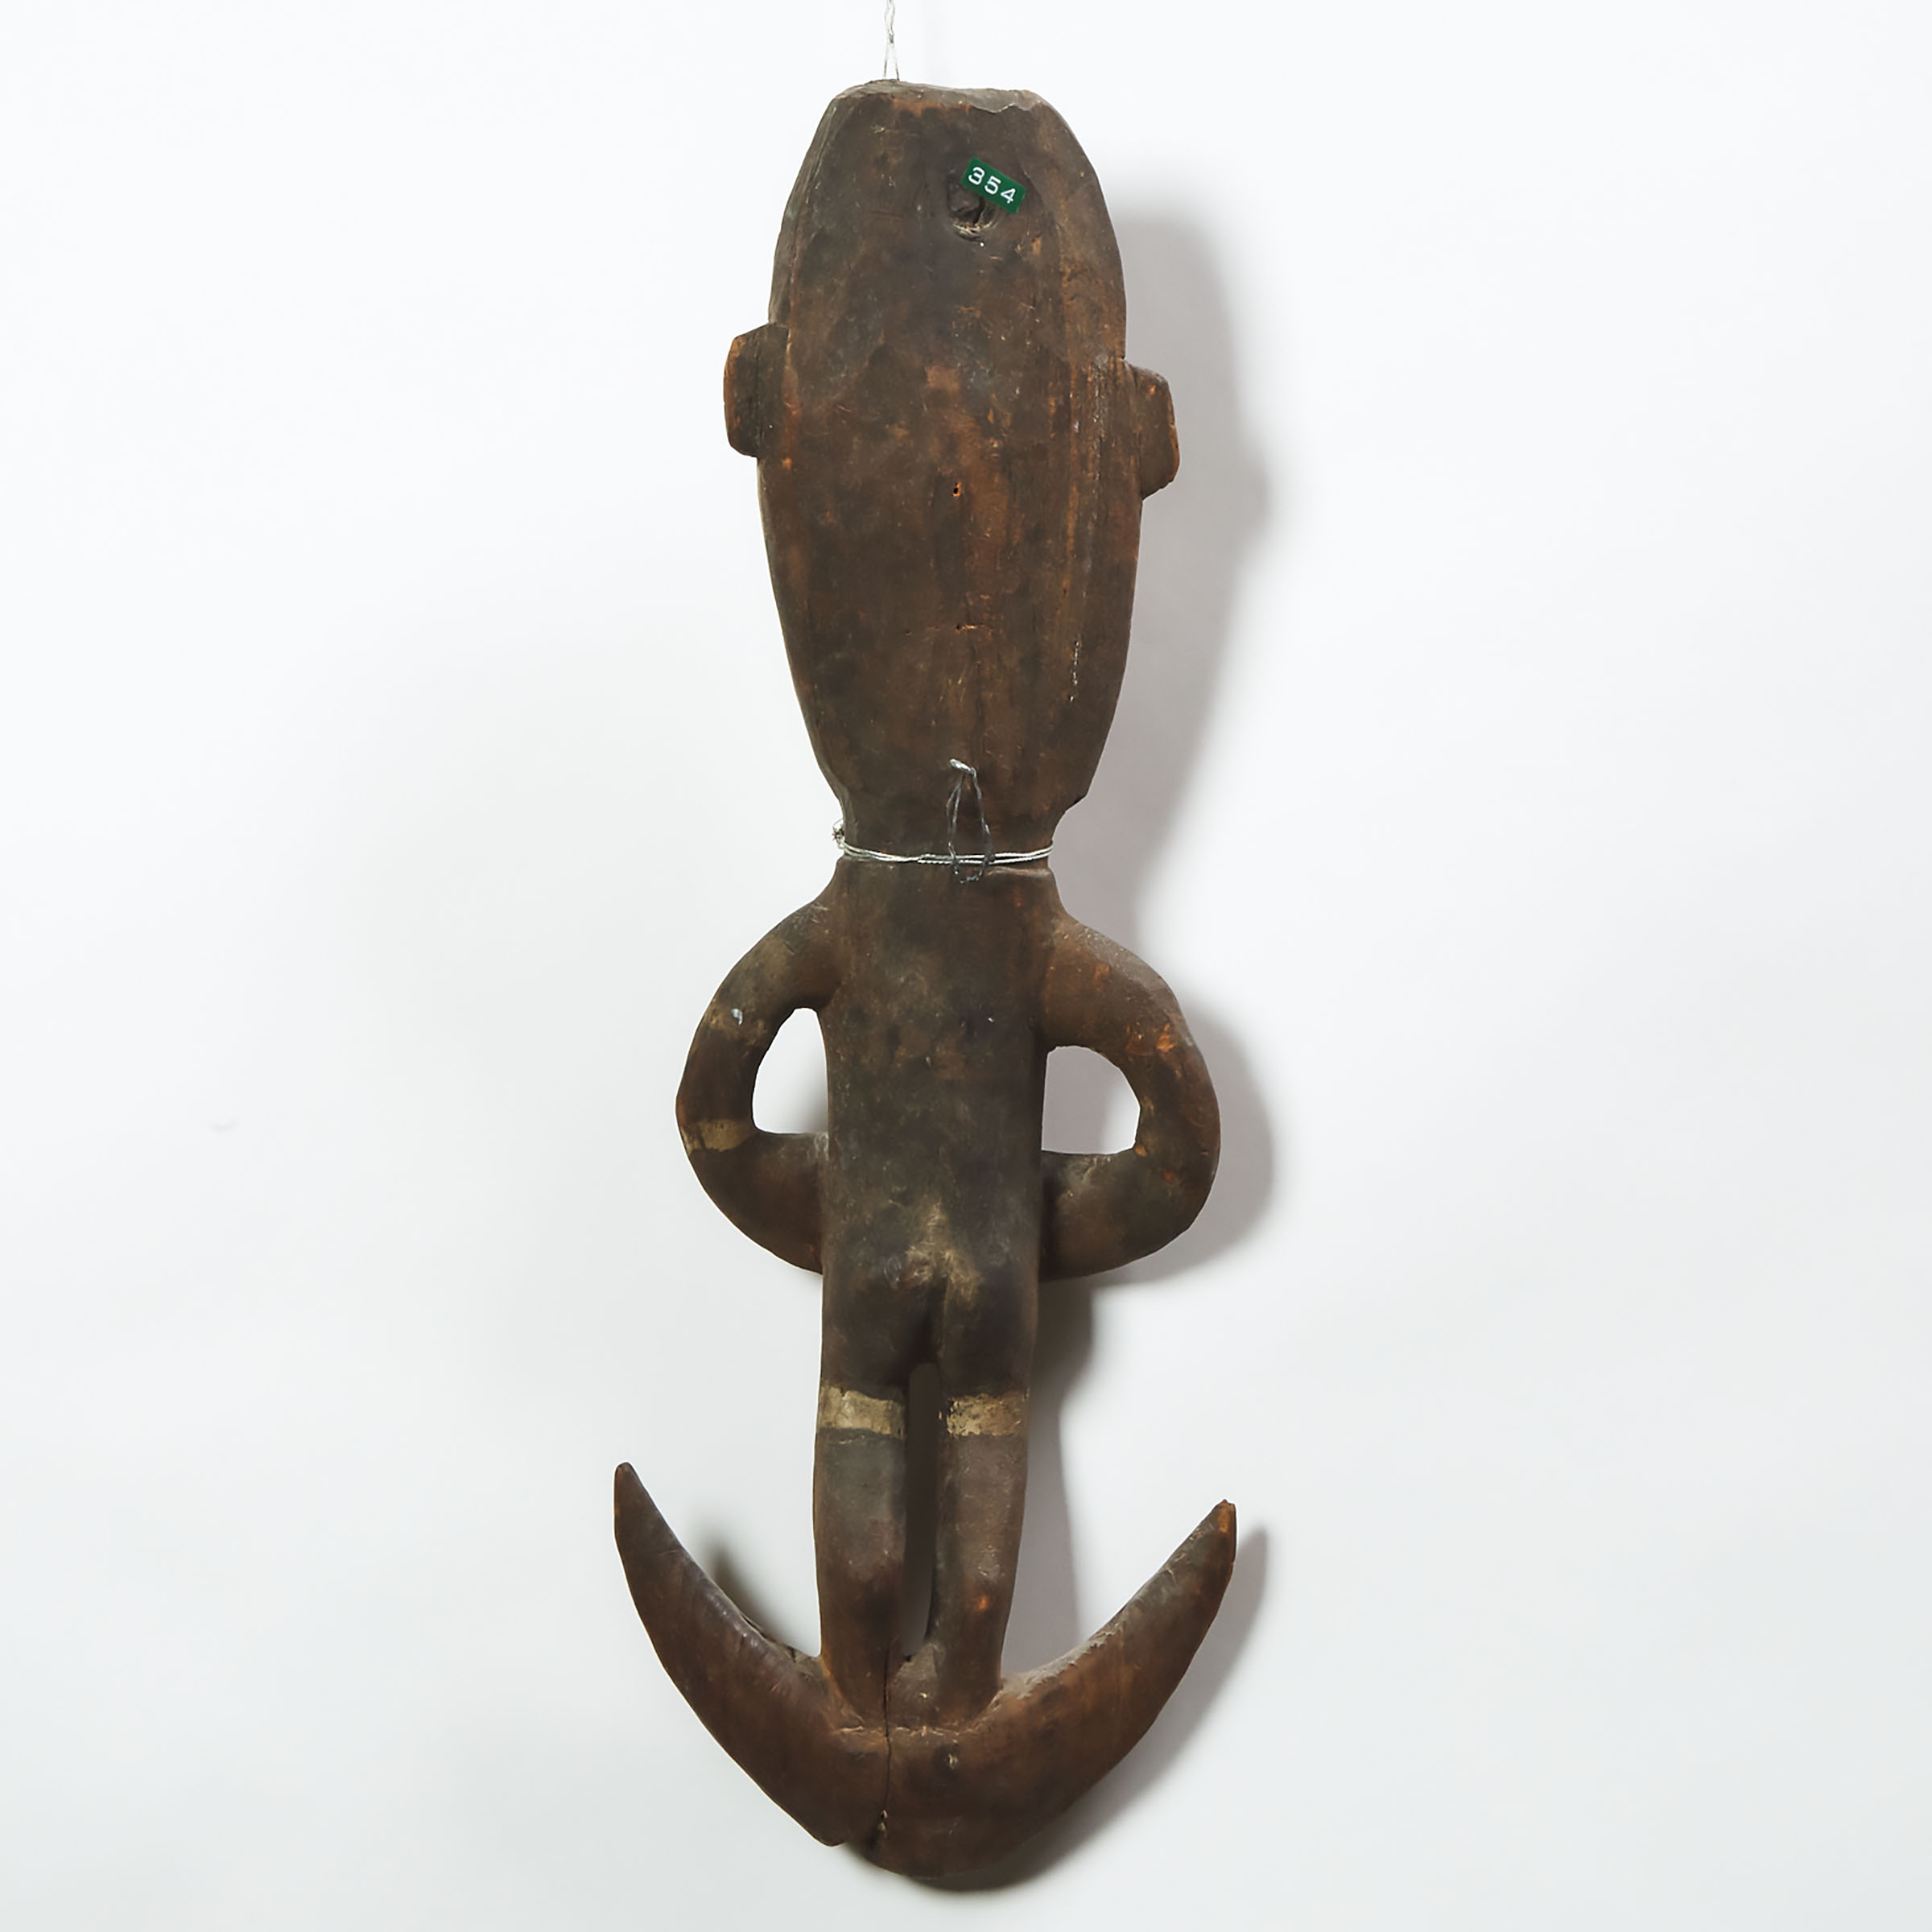 Sepik River Figural Suspension/Food Hook, Papua New Guinea, mid 20th century